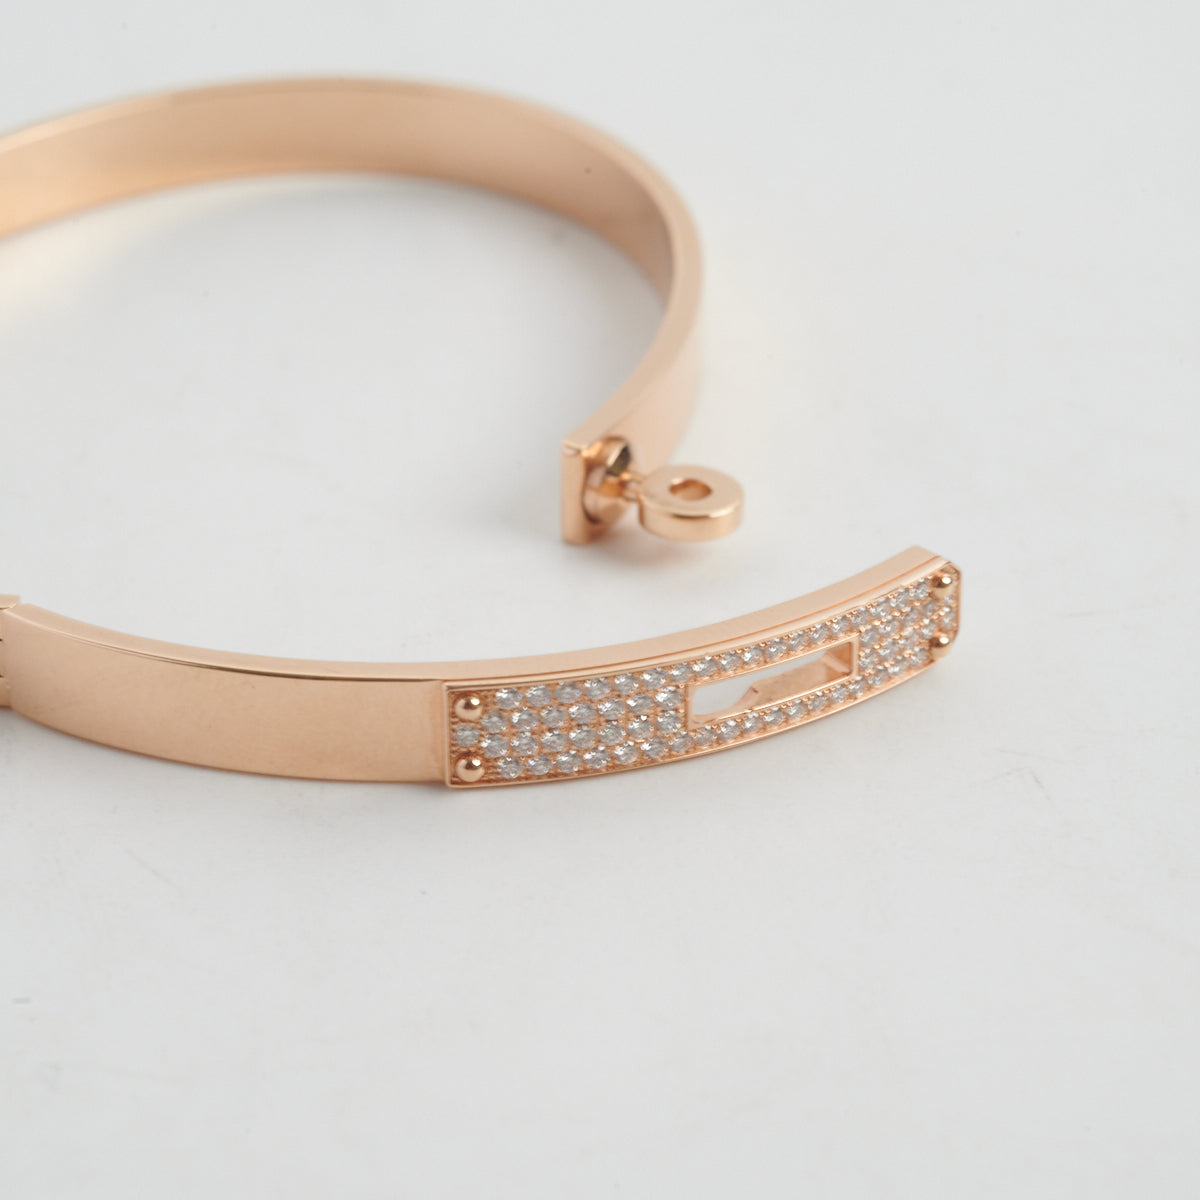 Hermès Kelly Bracelet, Small Model - Rose Gold, 0.36 ct, 15.8 cm